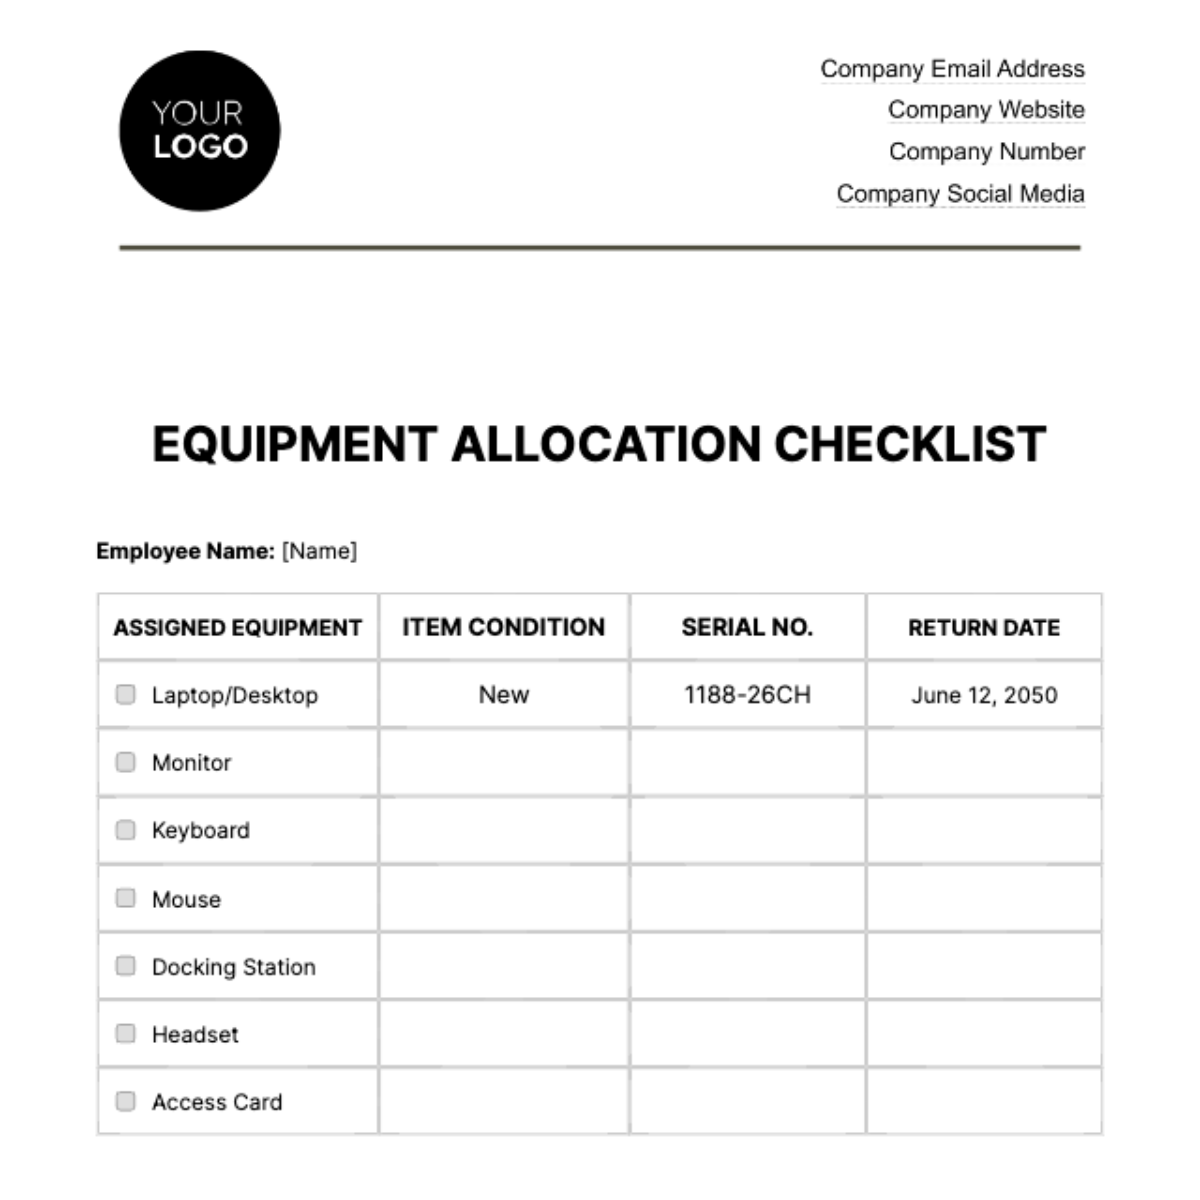 Equipment Allocation Checklist HR Template